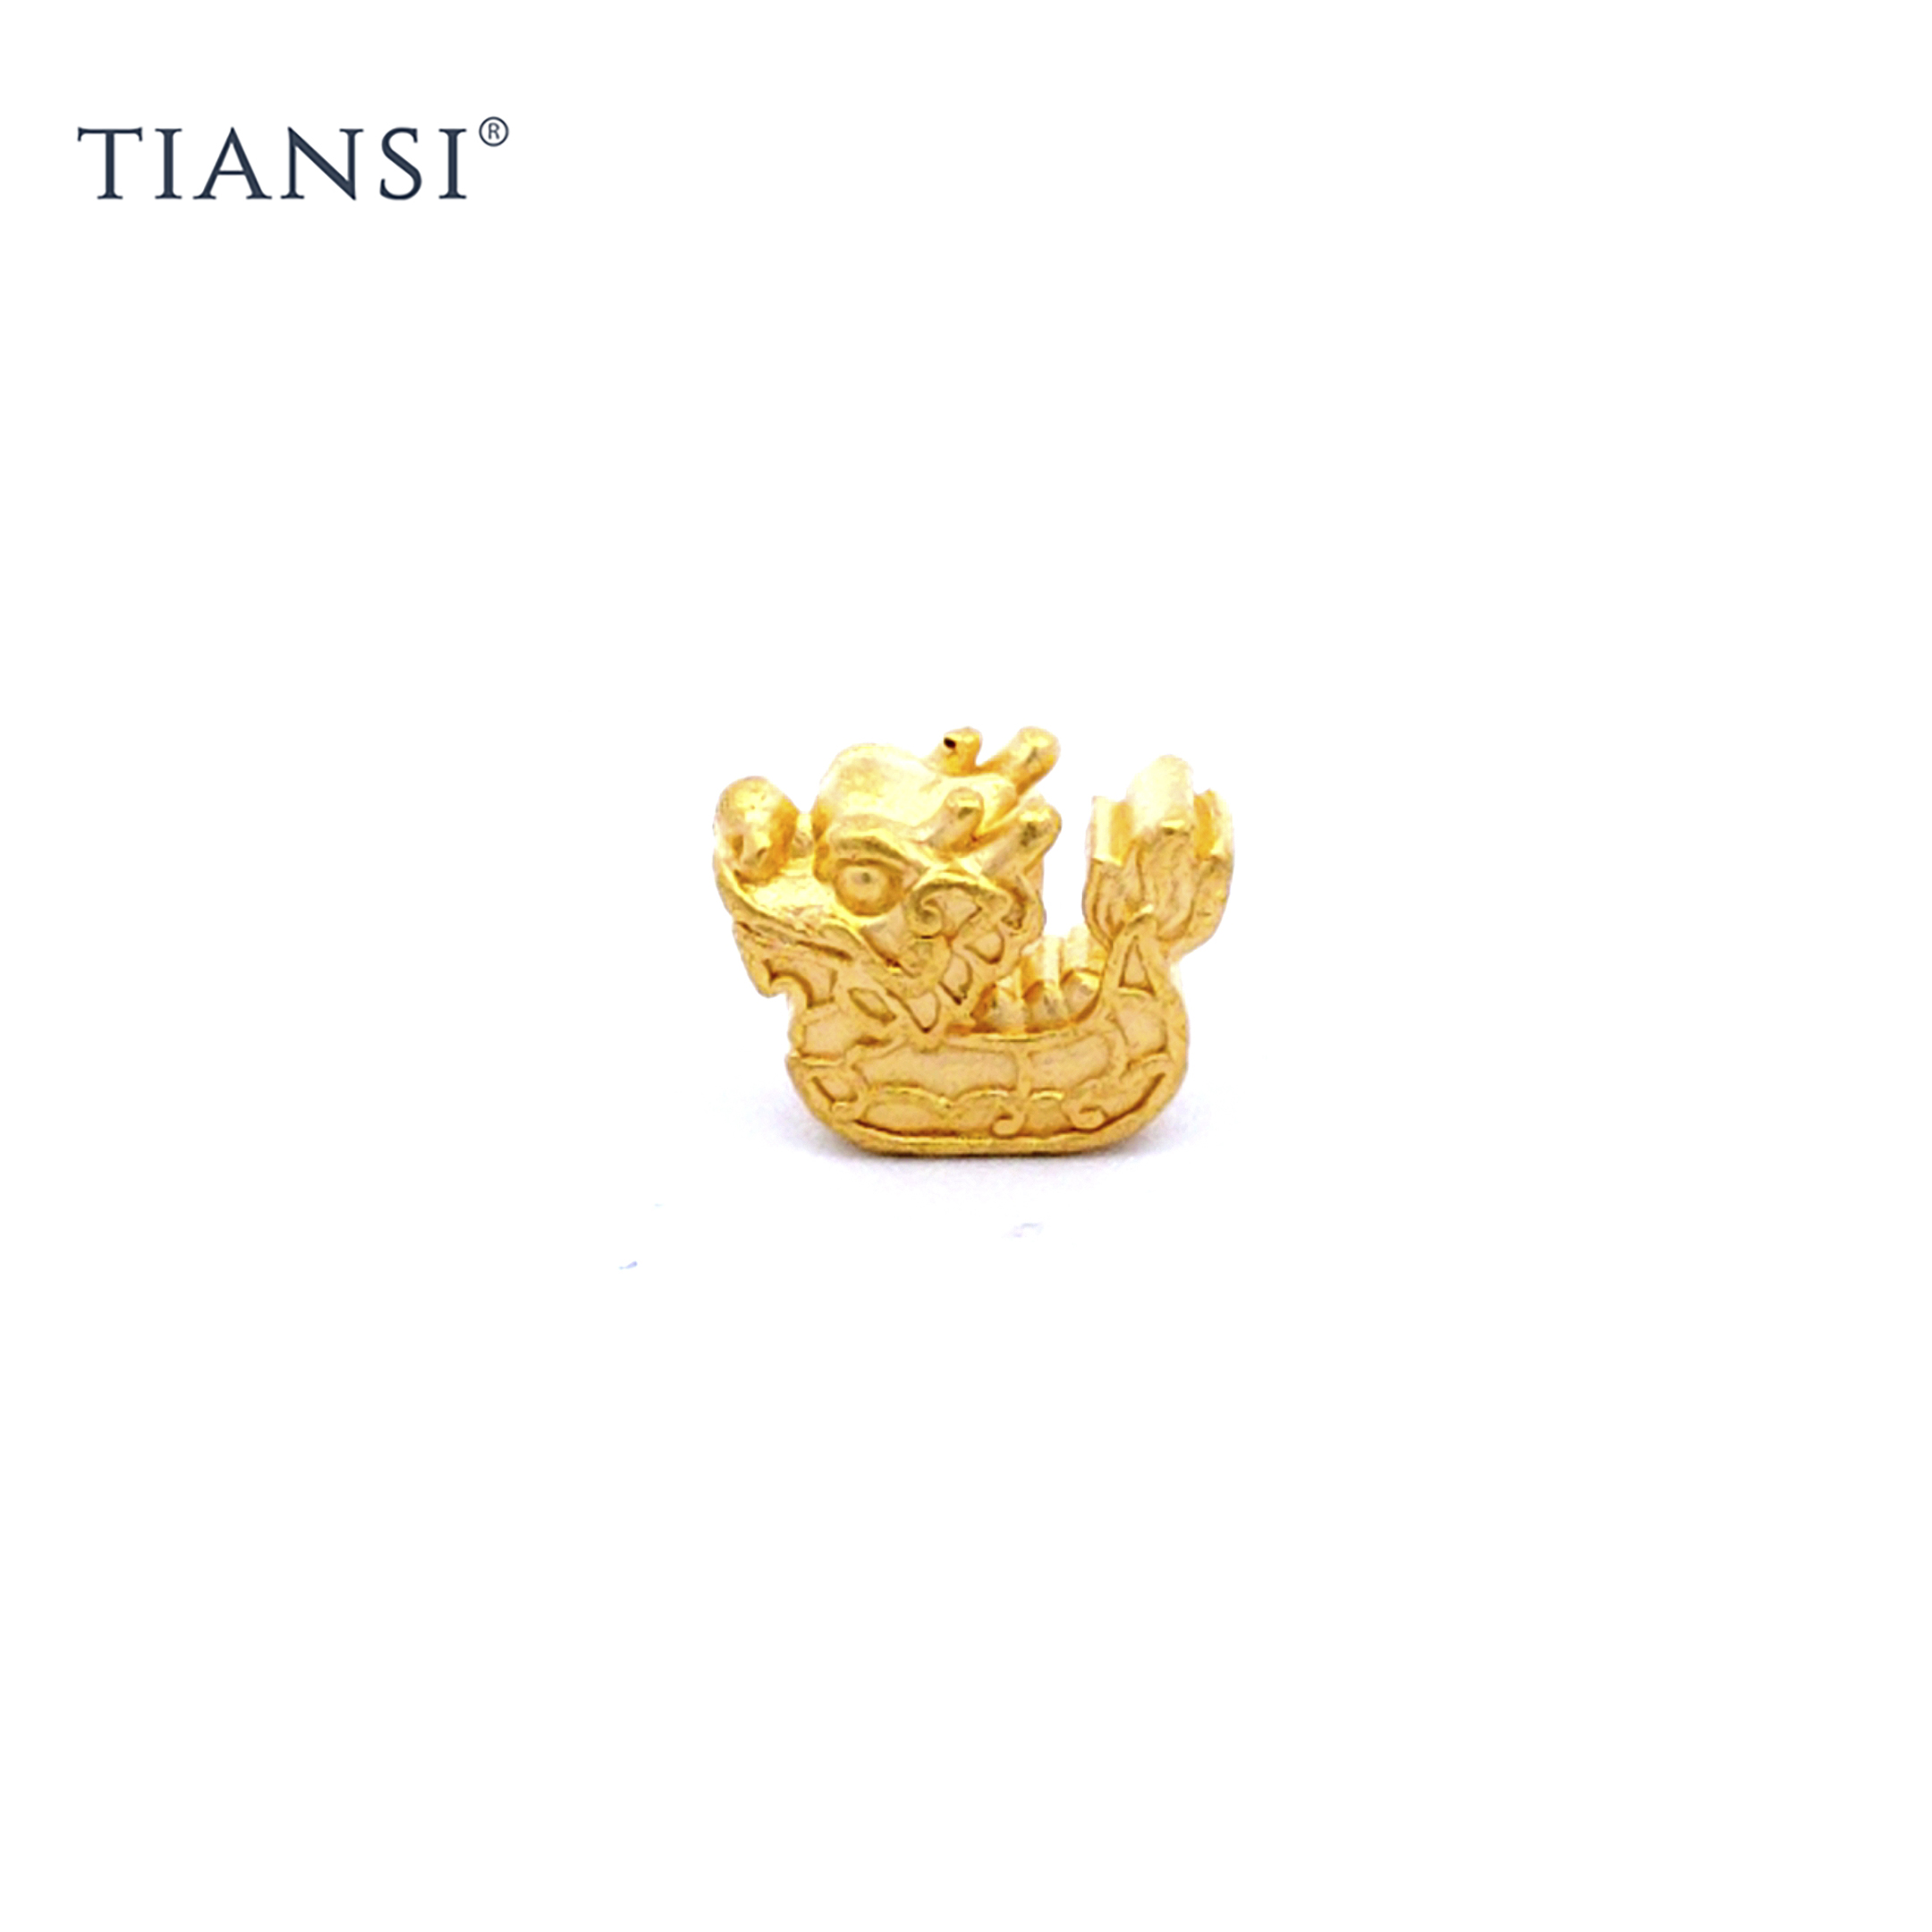 TIANSI 999(24K) Gold Dragon Boat Charm